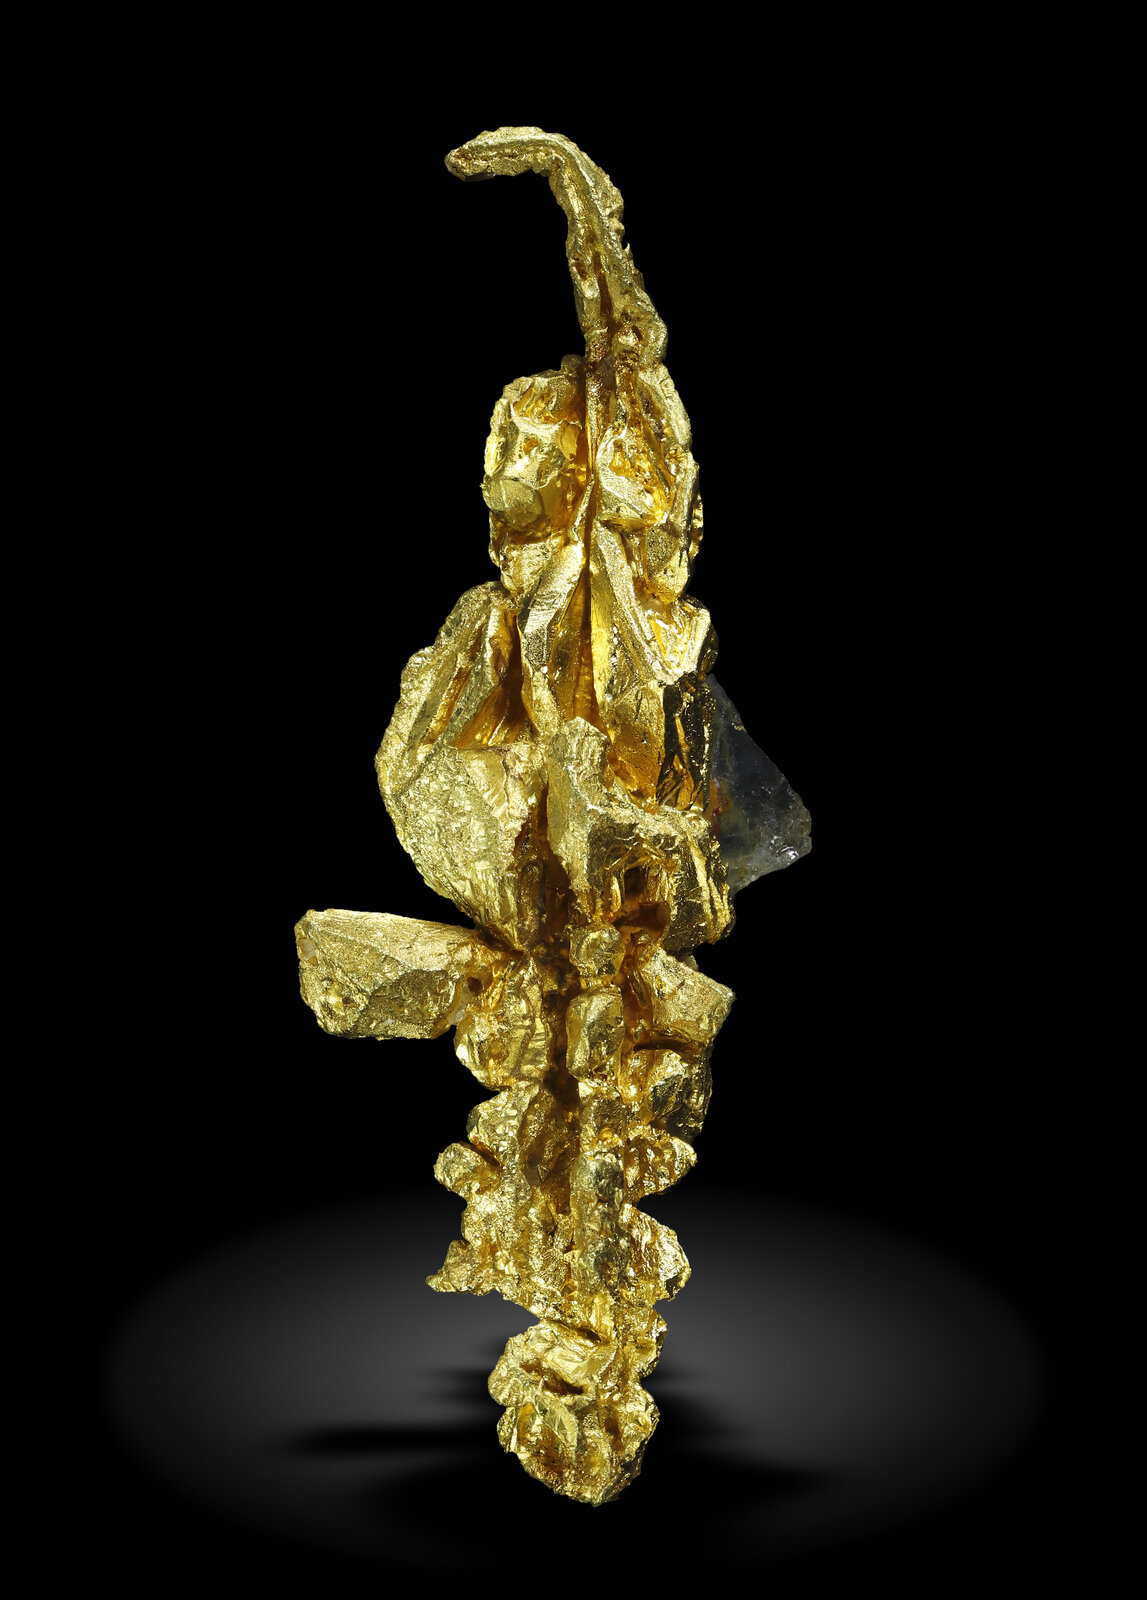 Gold (spinel twin) with Quartz - Aouint Ighoman, Assa-Zag Province ...